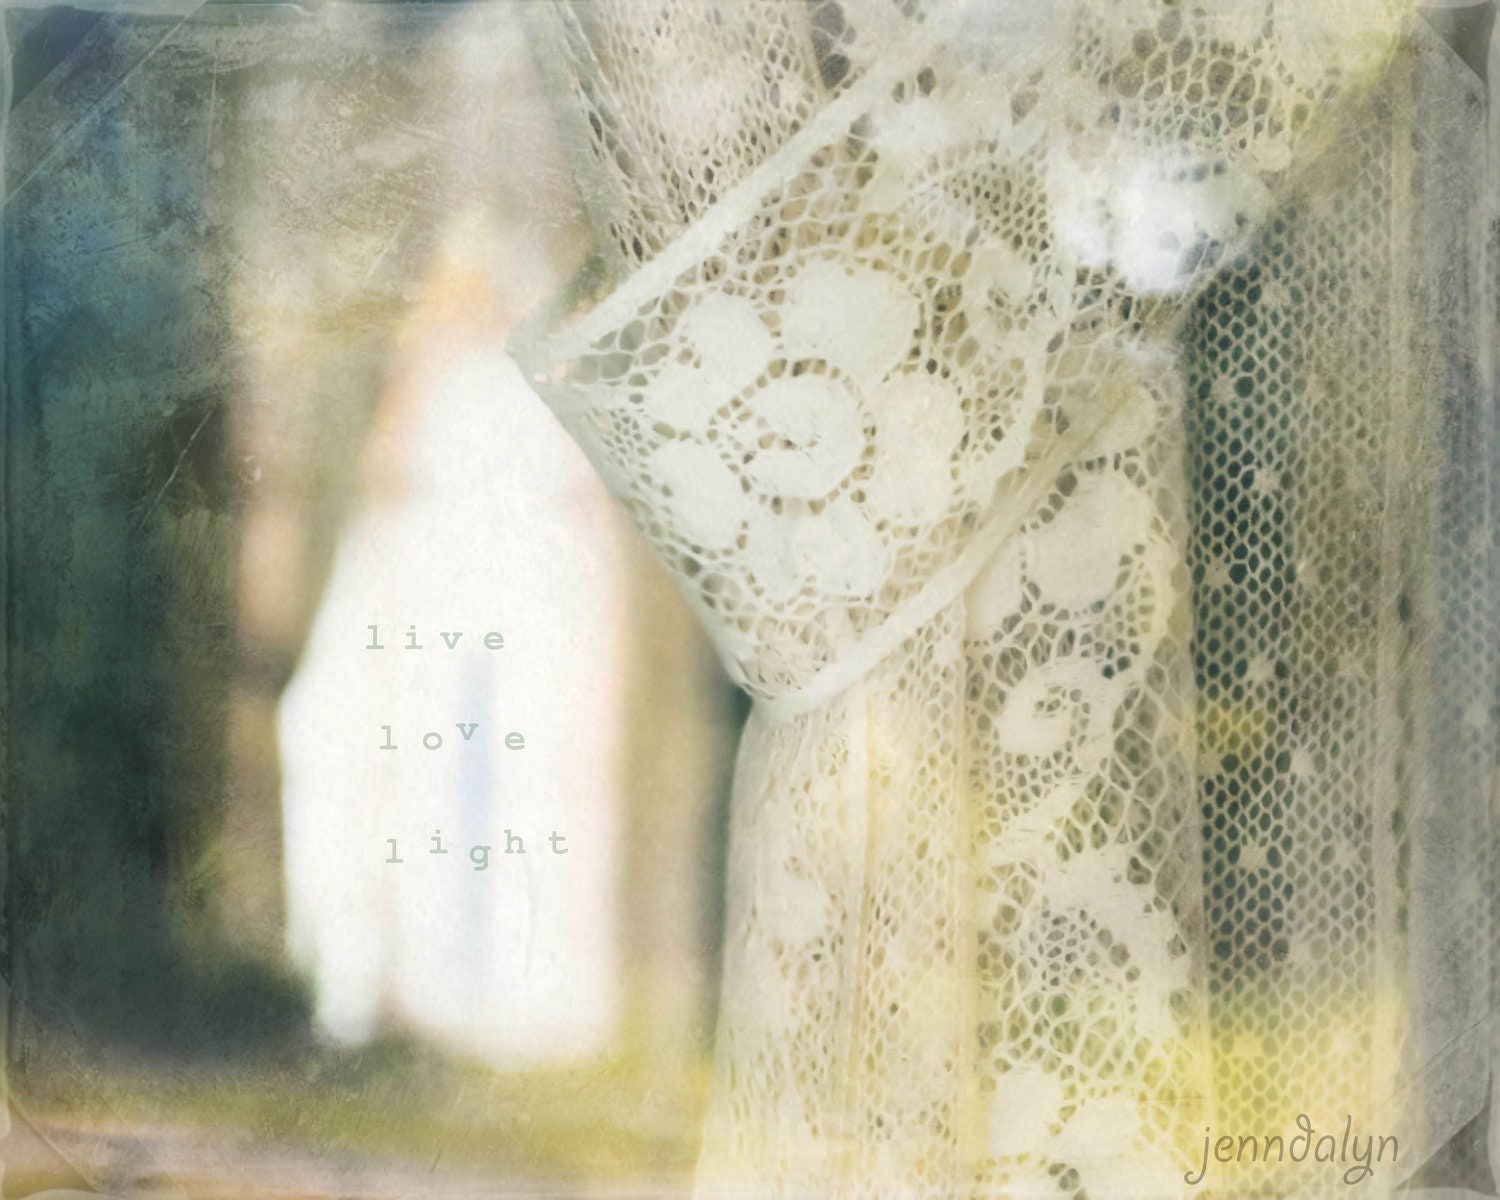 Live Love Light - PHOTO, country photo, farmhouse window, lace curtains, rustic decor - Jenndalyn